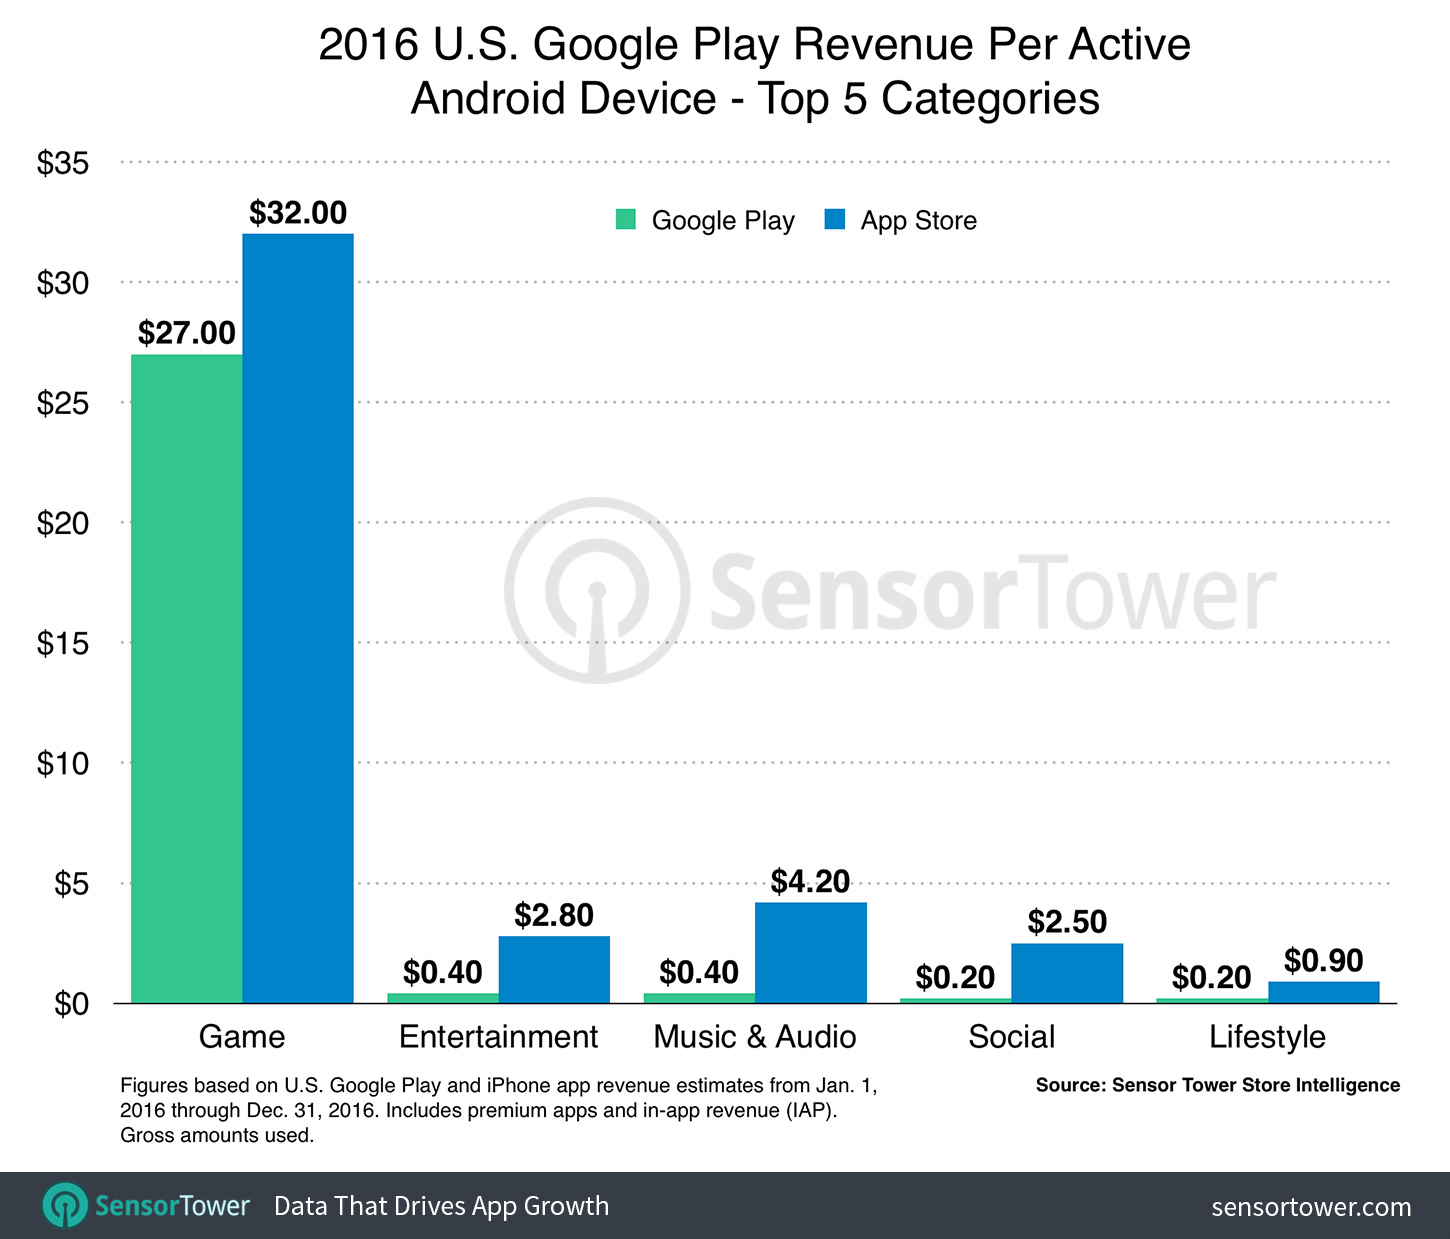 Android Per Active Device Average Revenue U.S. 2016 vs. iPhone